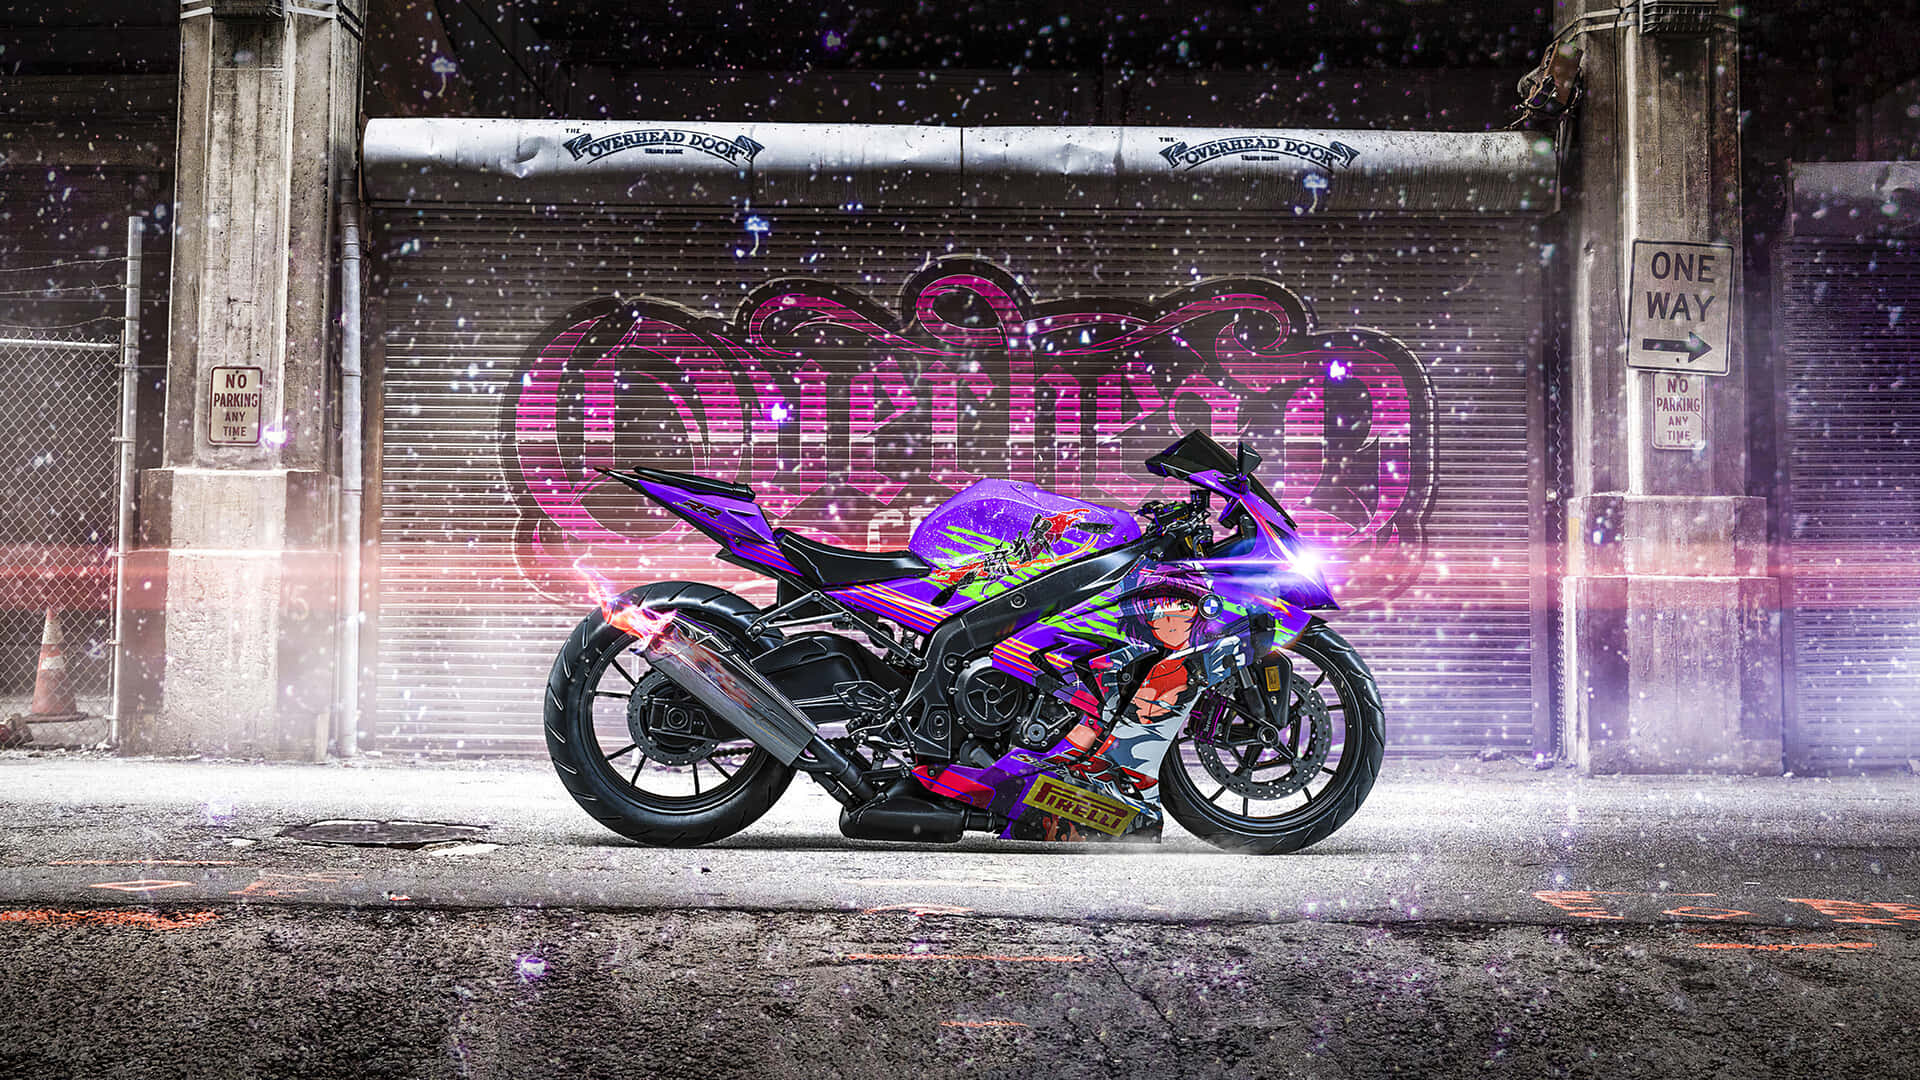  Motorrad Hintergrundbild 1920x1080. 2560x1440 Motorcycle Wallpaper